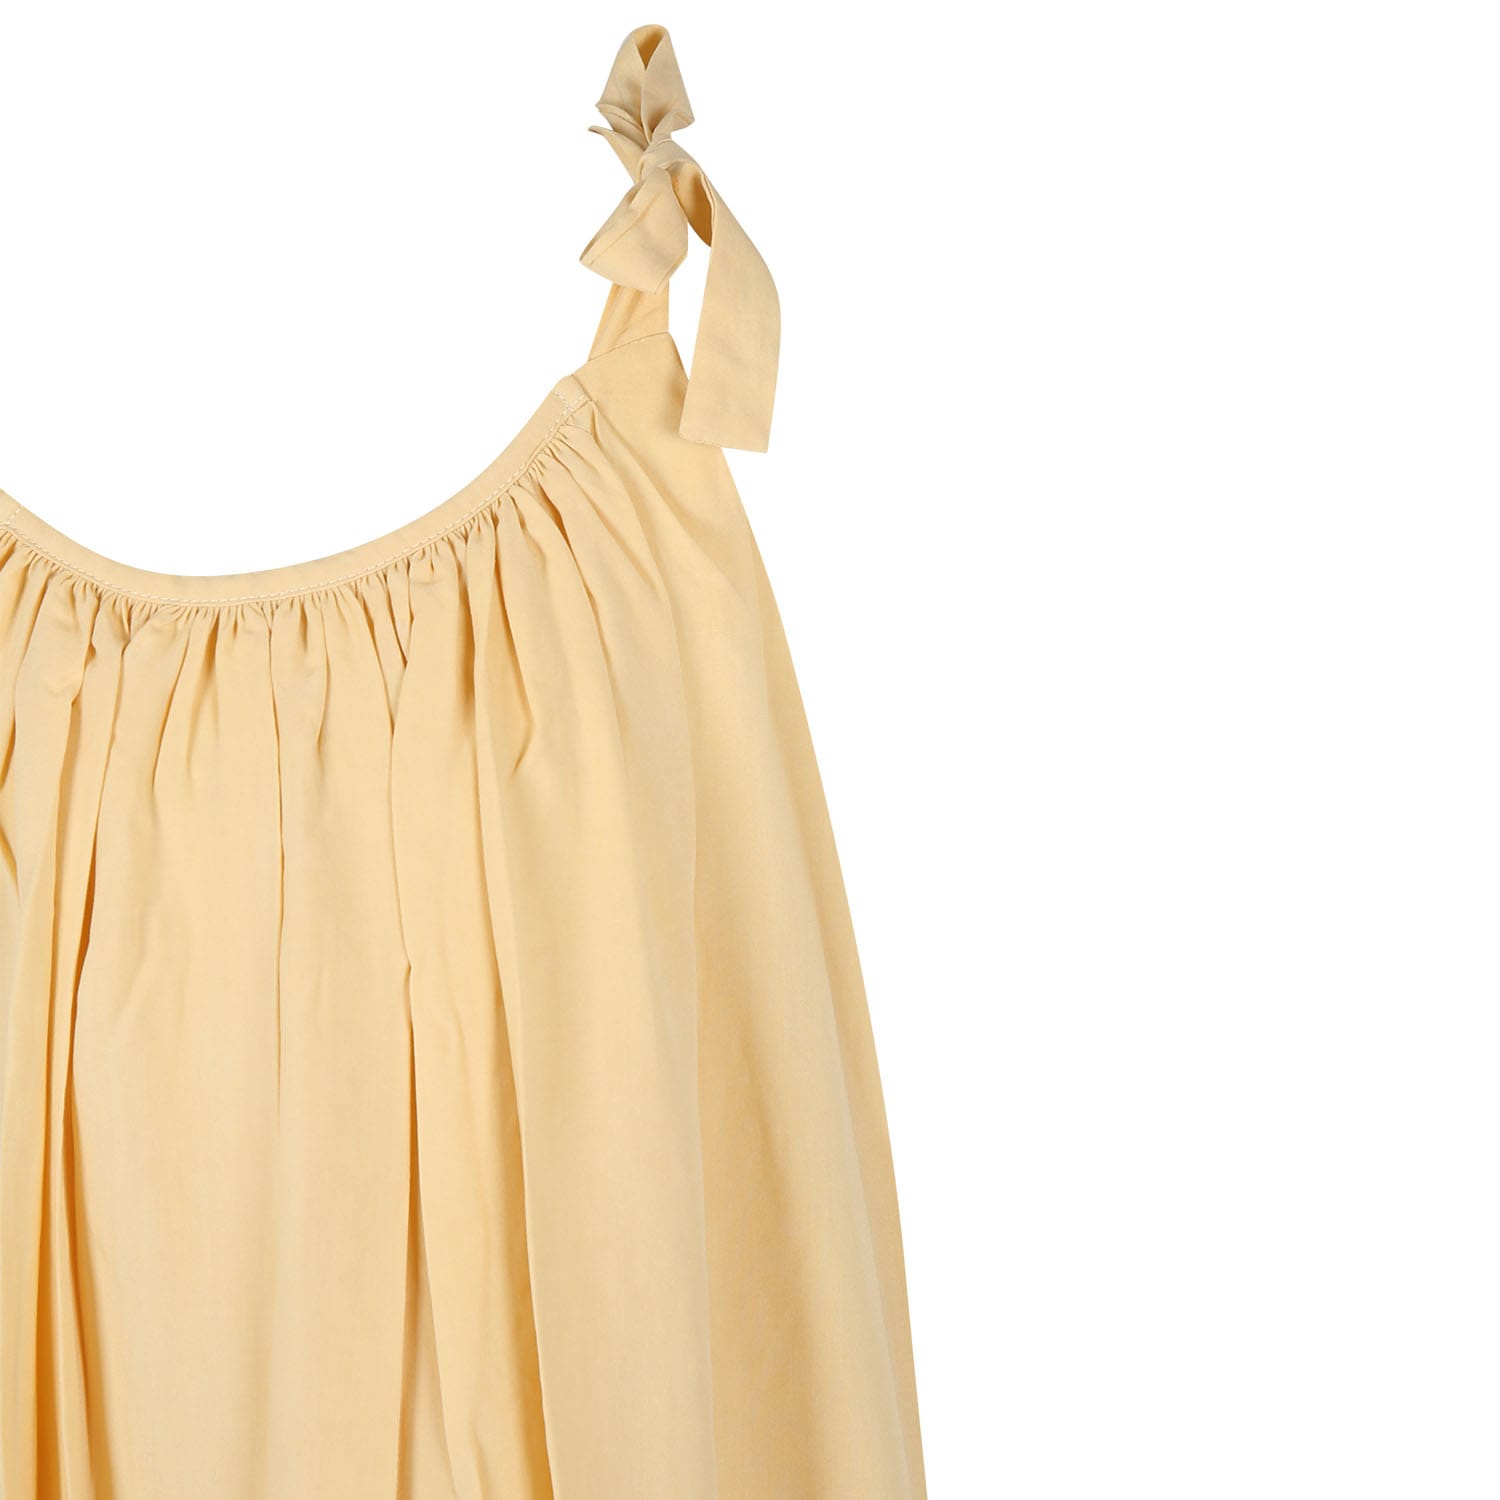 Shop Coco Au Lait Yellow Dress For Girl